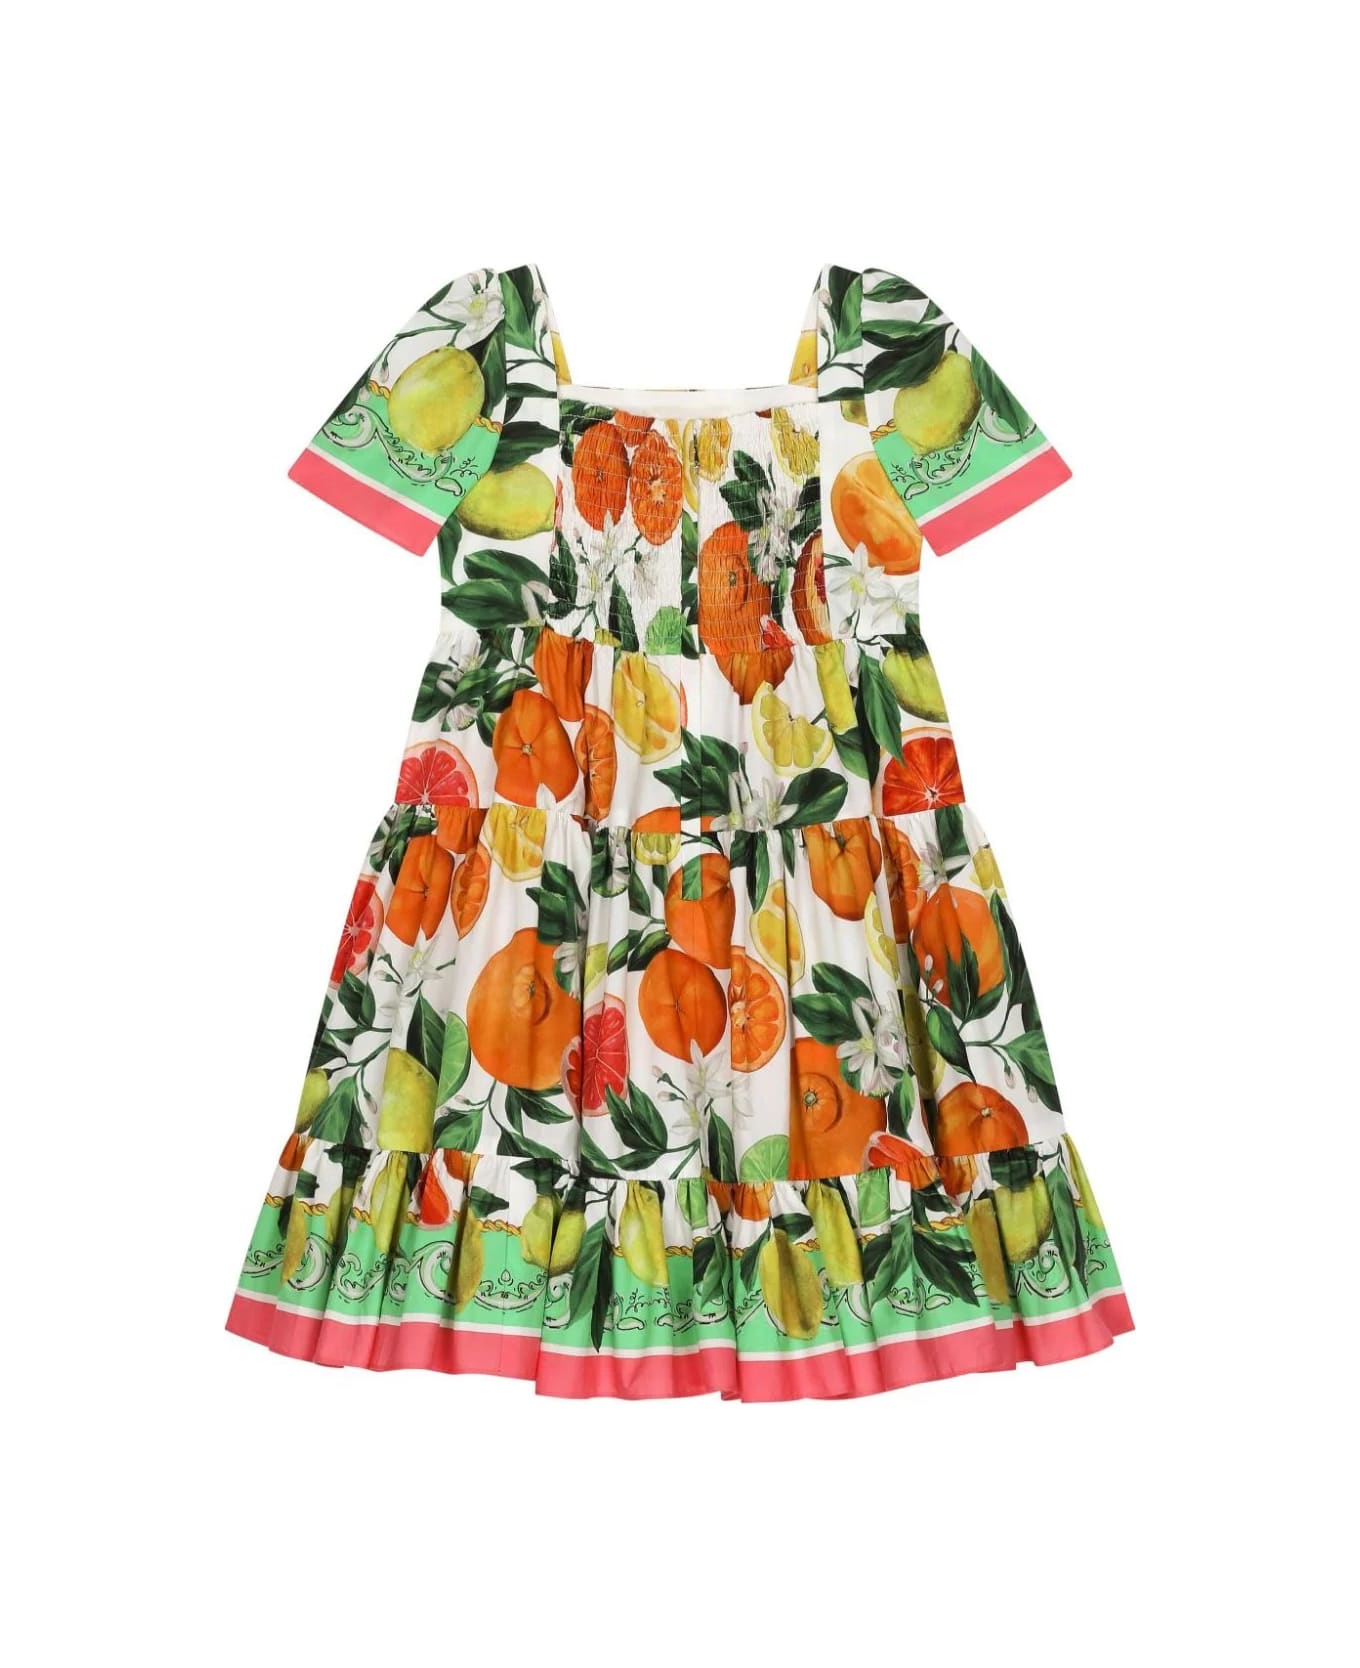 Dolce & Gabbana Multicolored Dress With Orange And Lemon Print - Multicolour